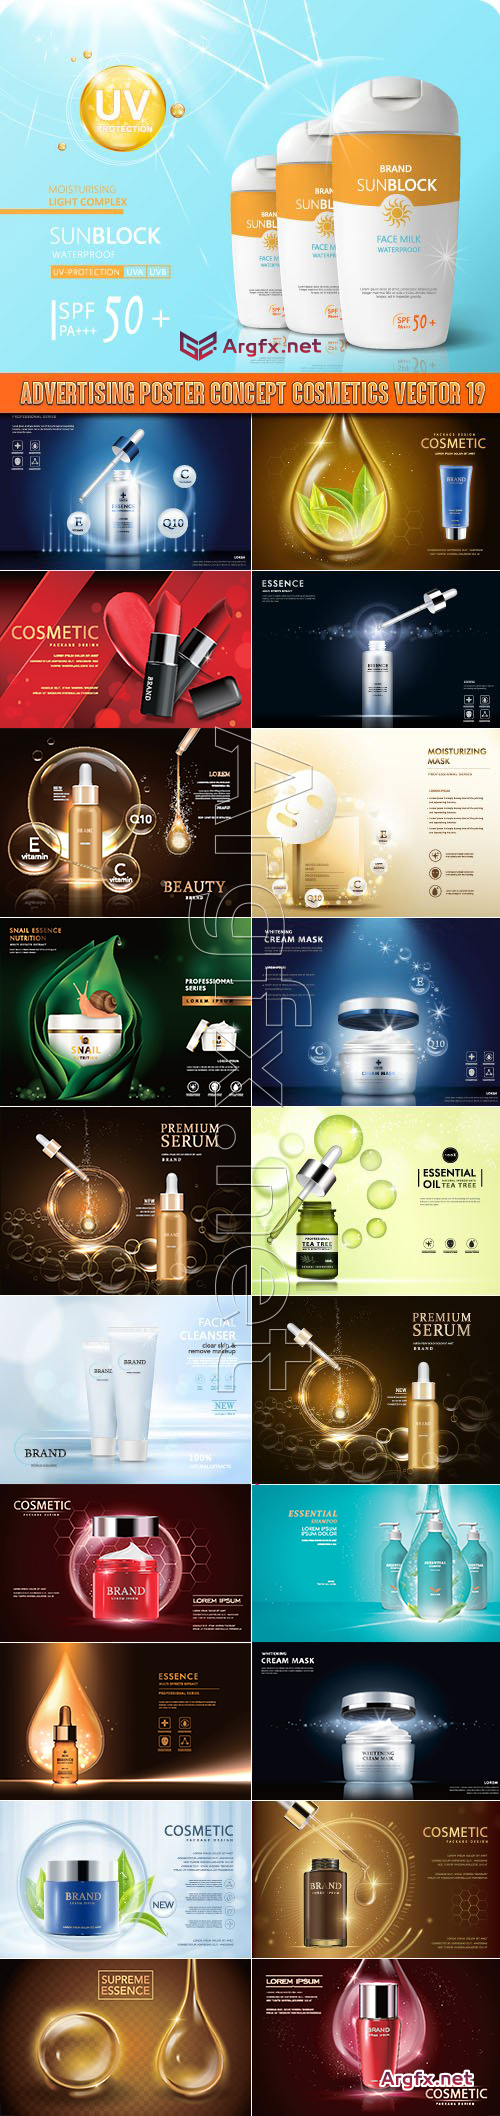 Advertising Poster Concept Cosmetics vector 19